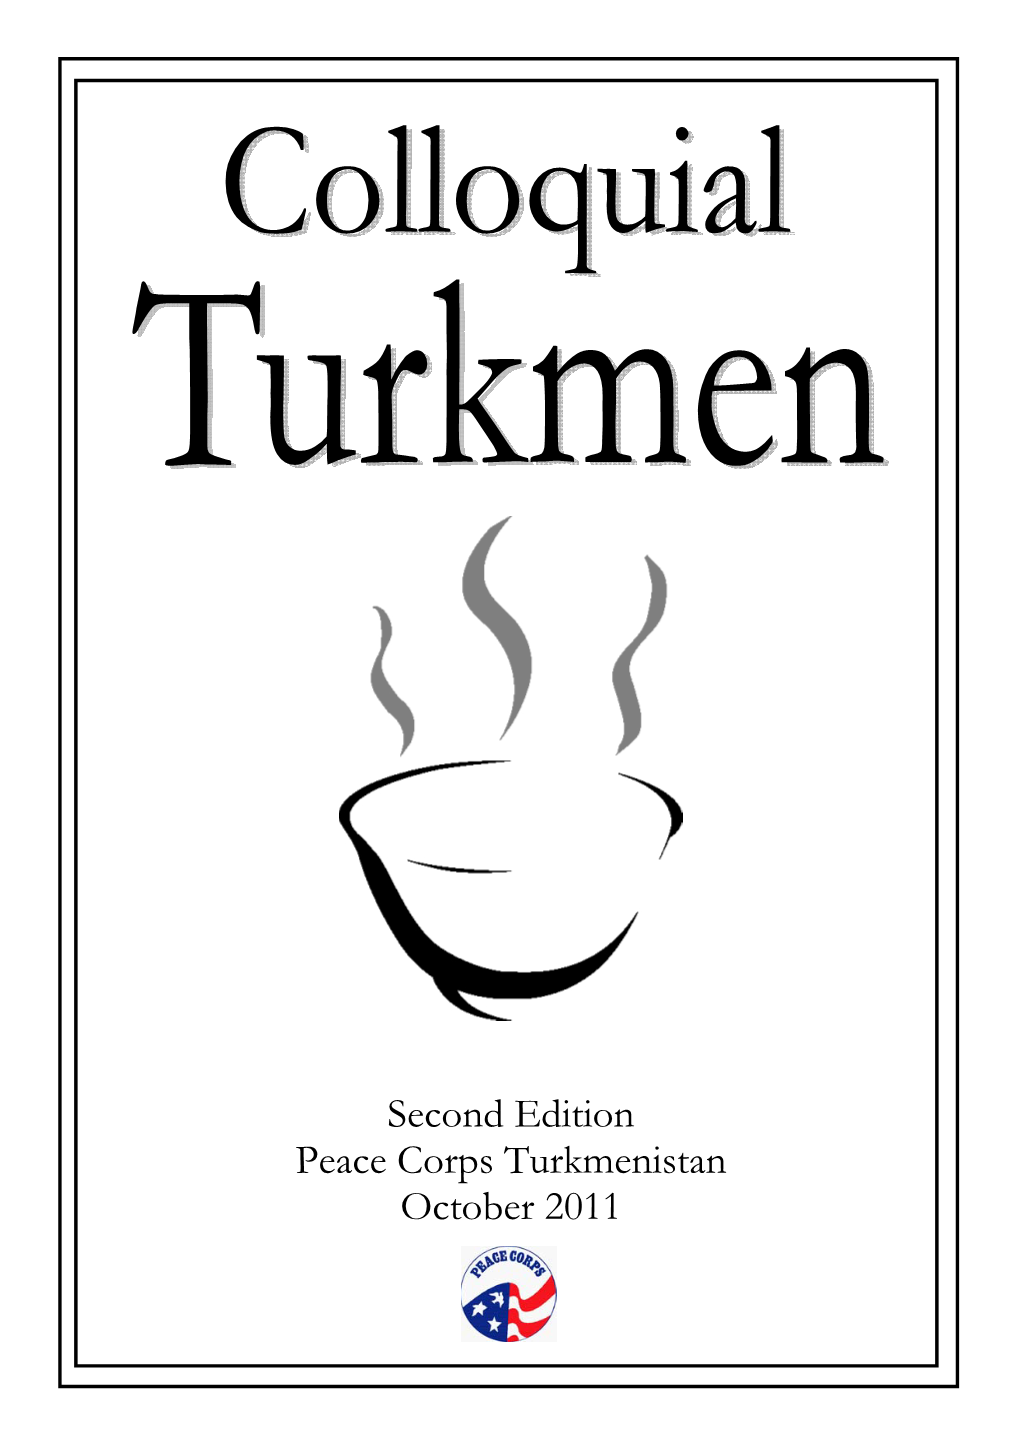 Colloquial Turkmen: Second Edition